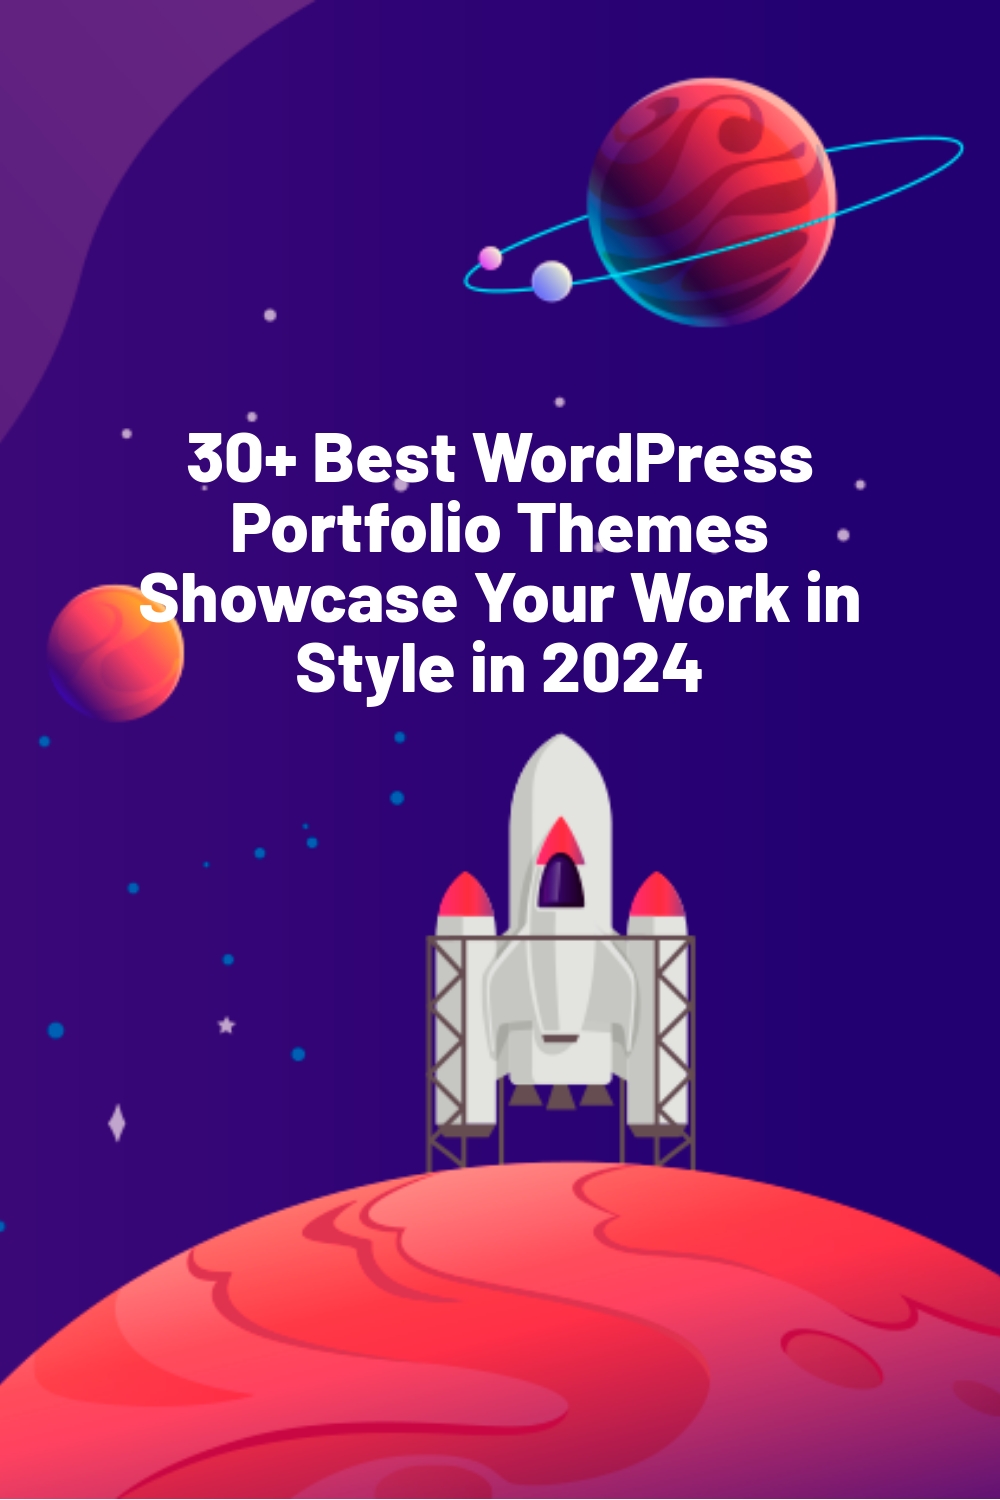 30+ Best WordPress Portfolio Themes Showcase Your Work in Style in 2024